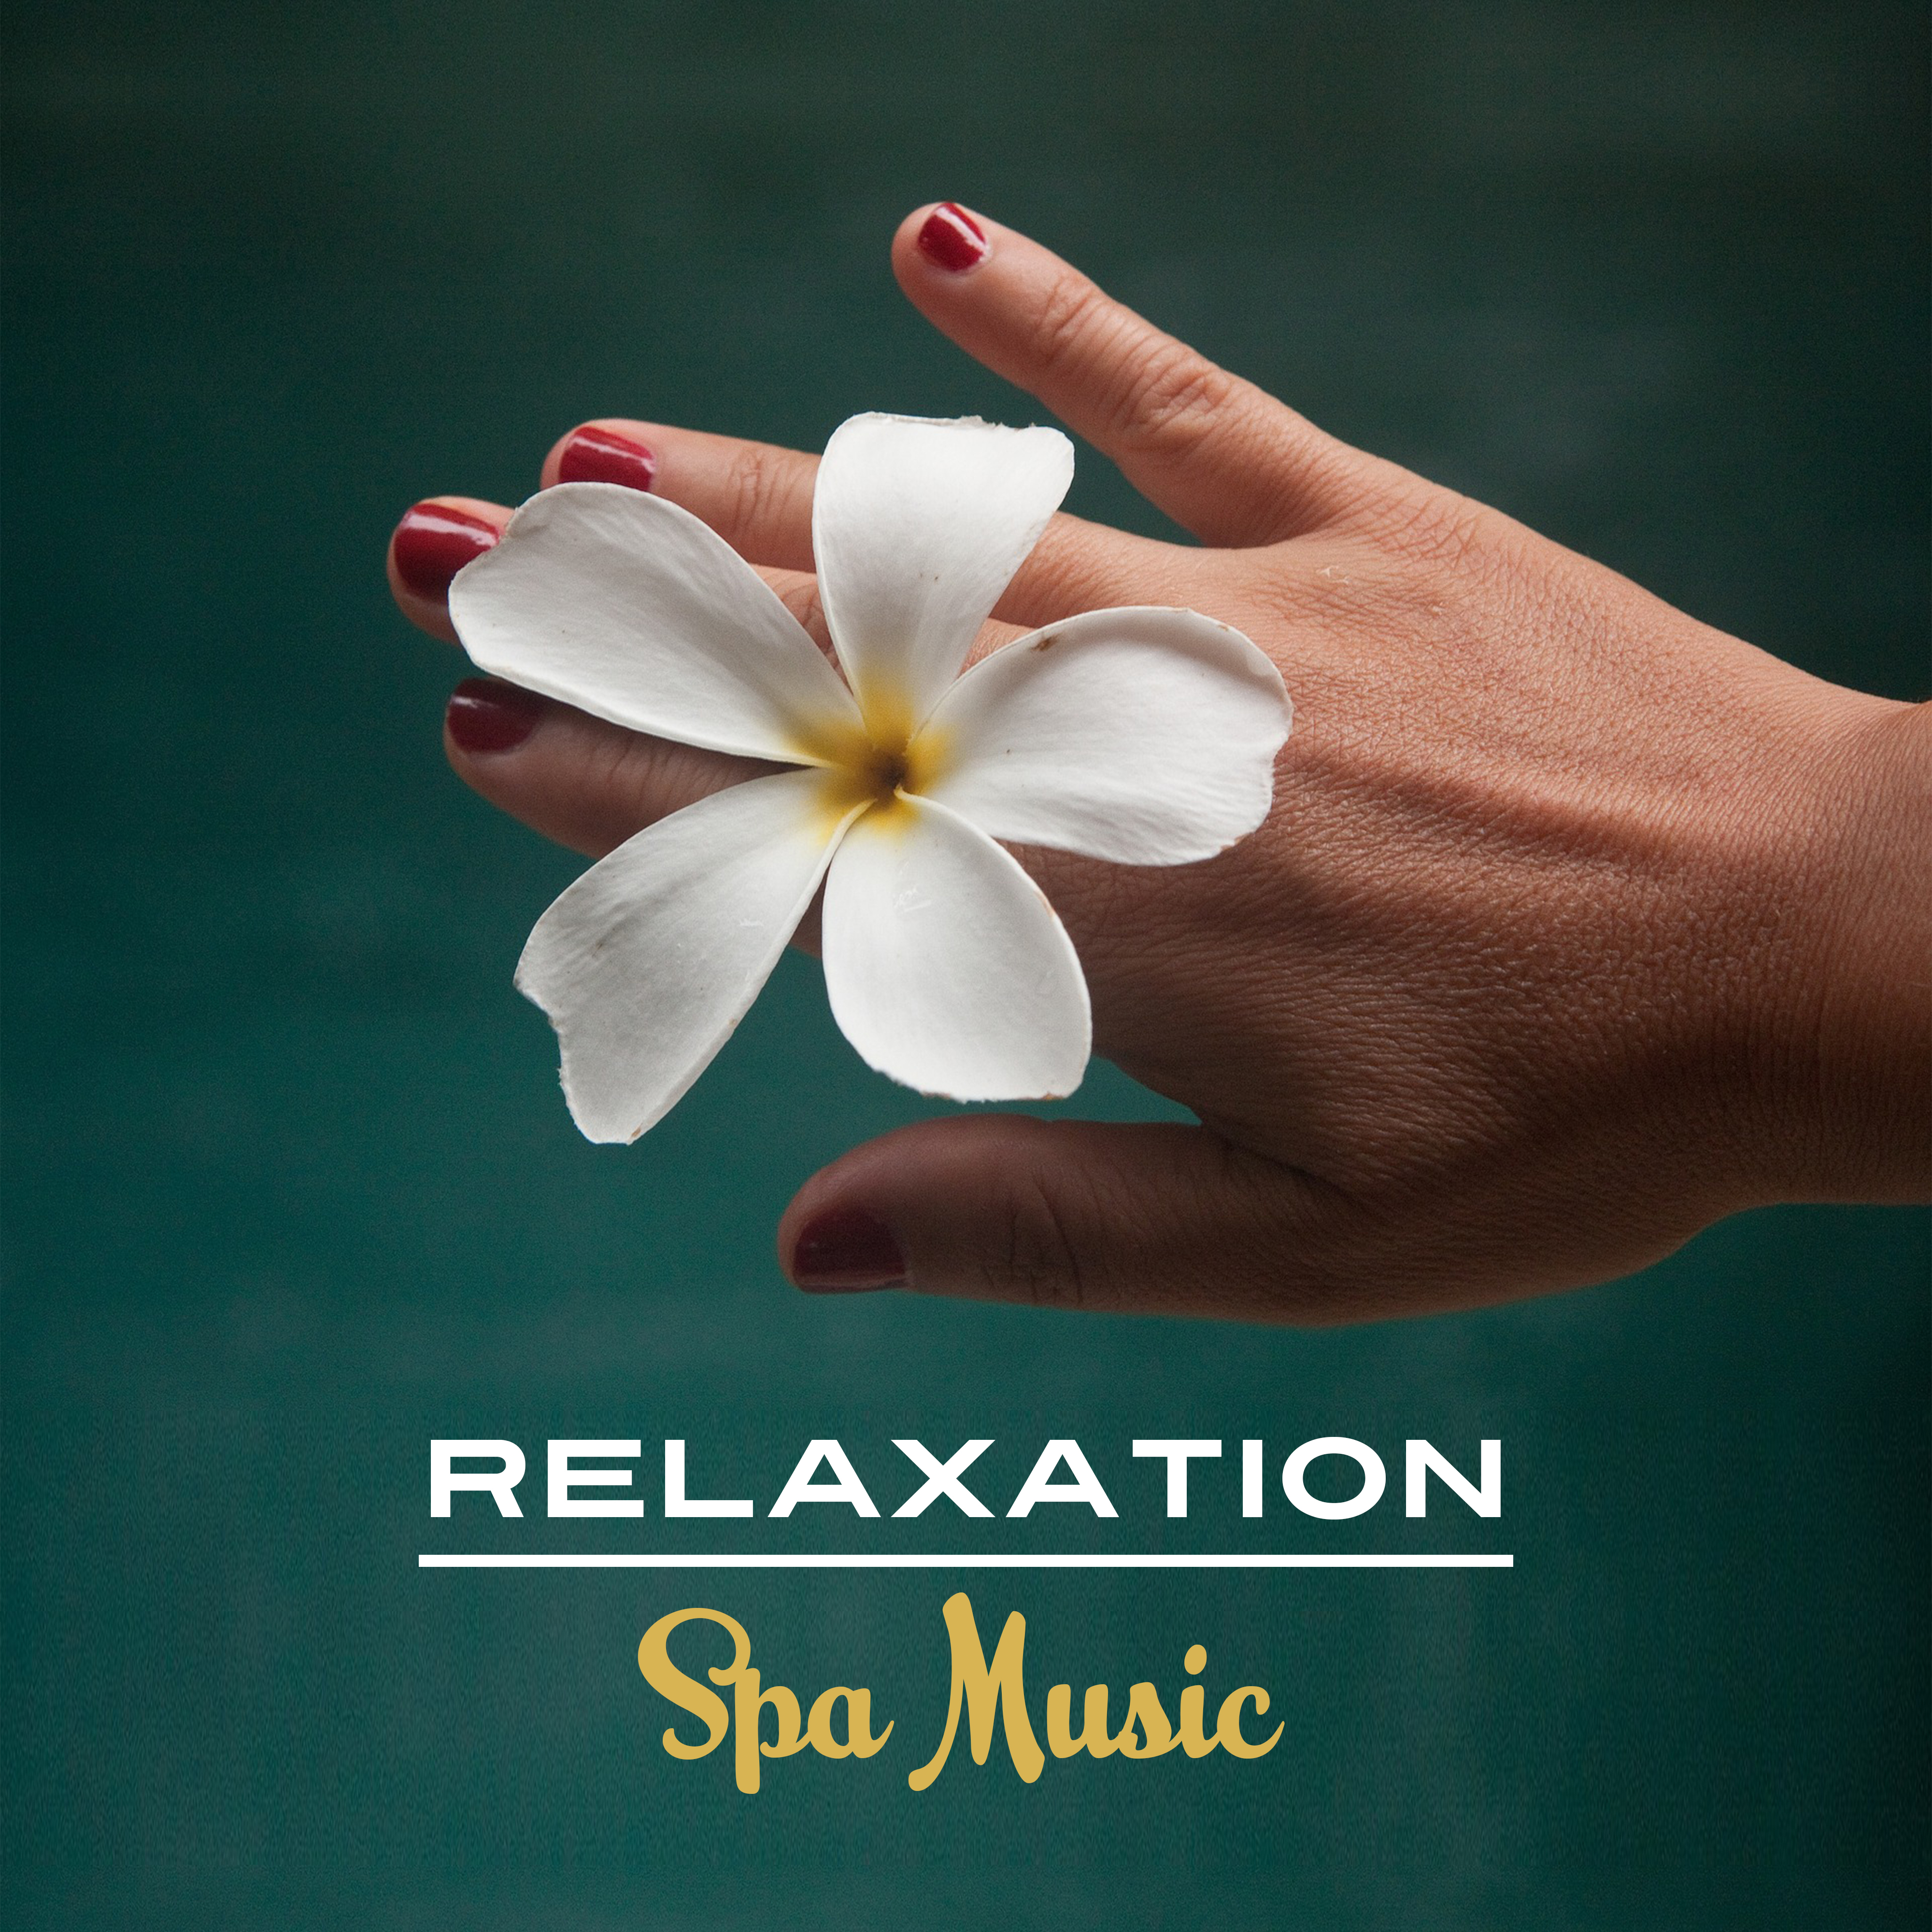 Relaxation Spa Music  Serenity Nature Sounds, Relaxing Music, Pure Massage, Deep Rest, Zen